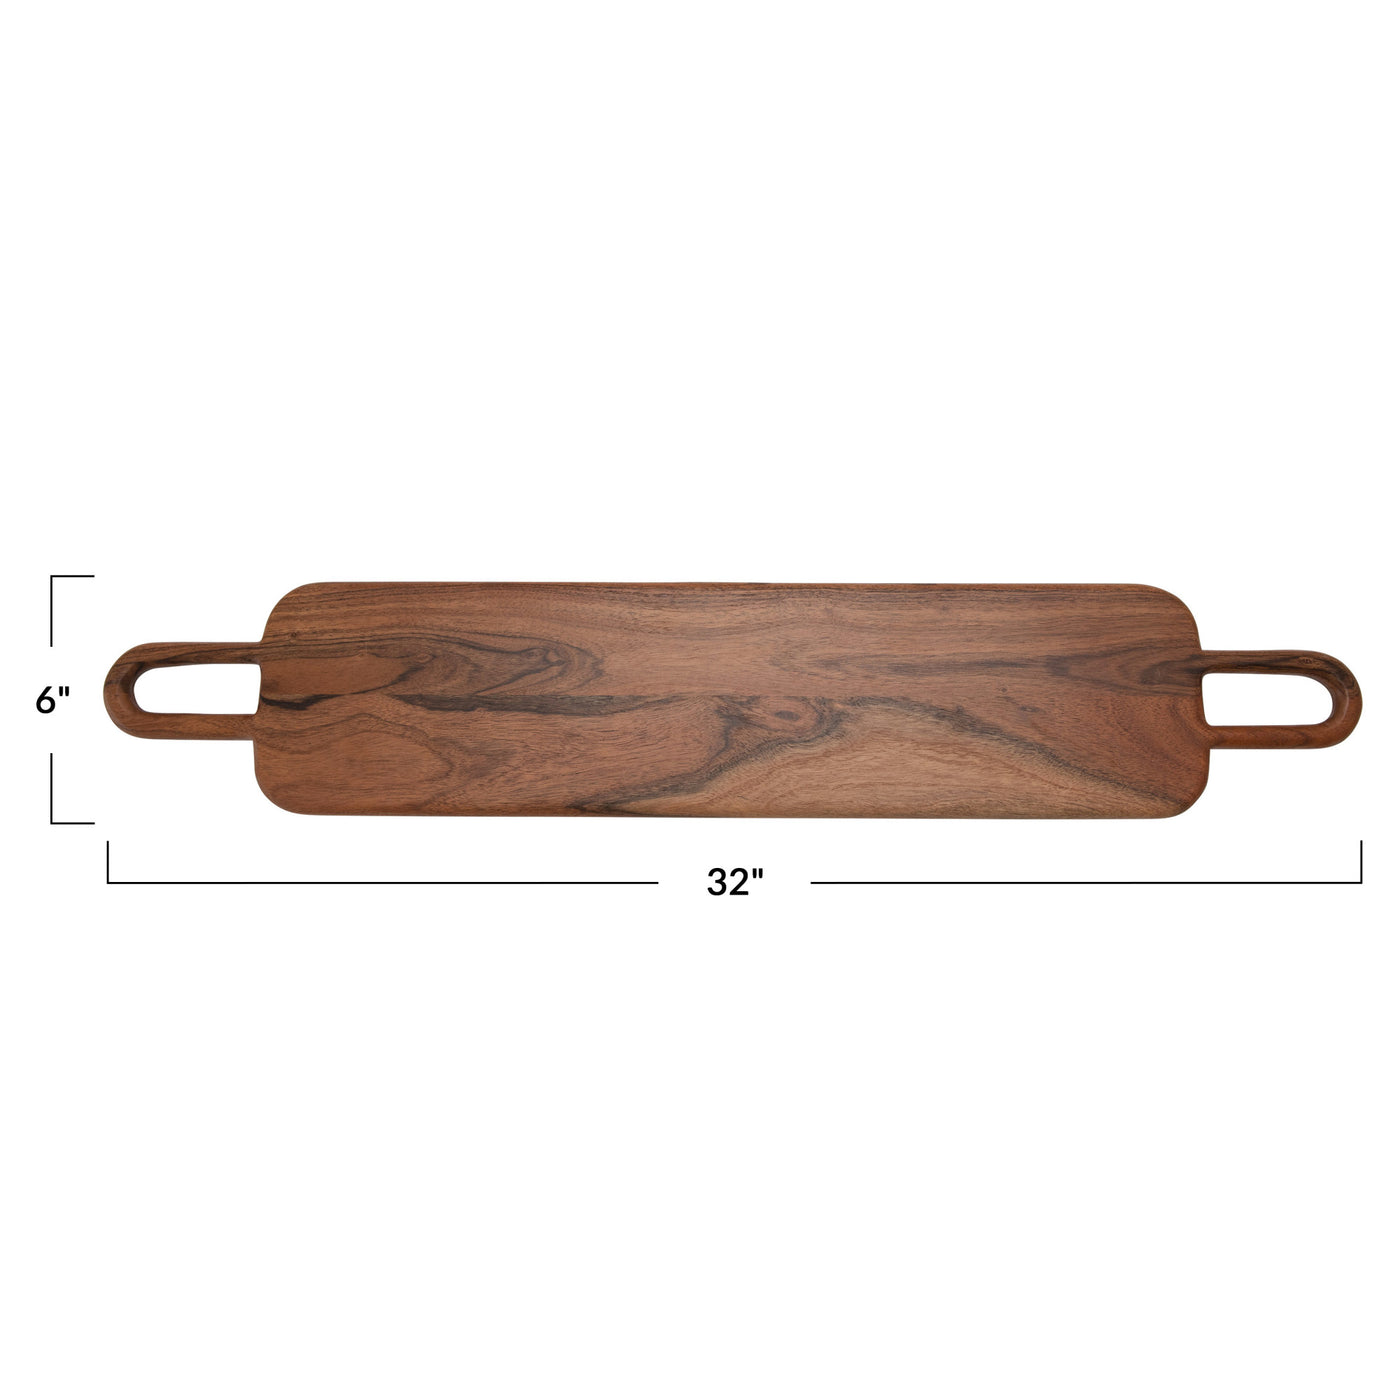 Acacia Wood Charcuterie & Cutting Board w/ Handles